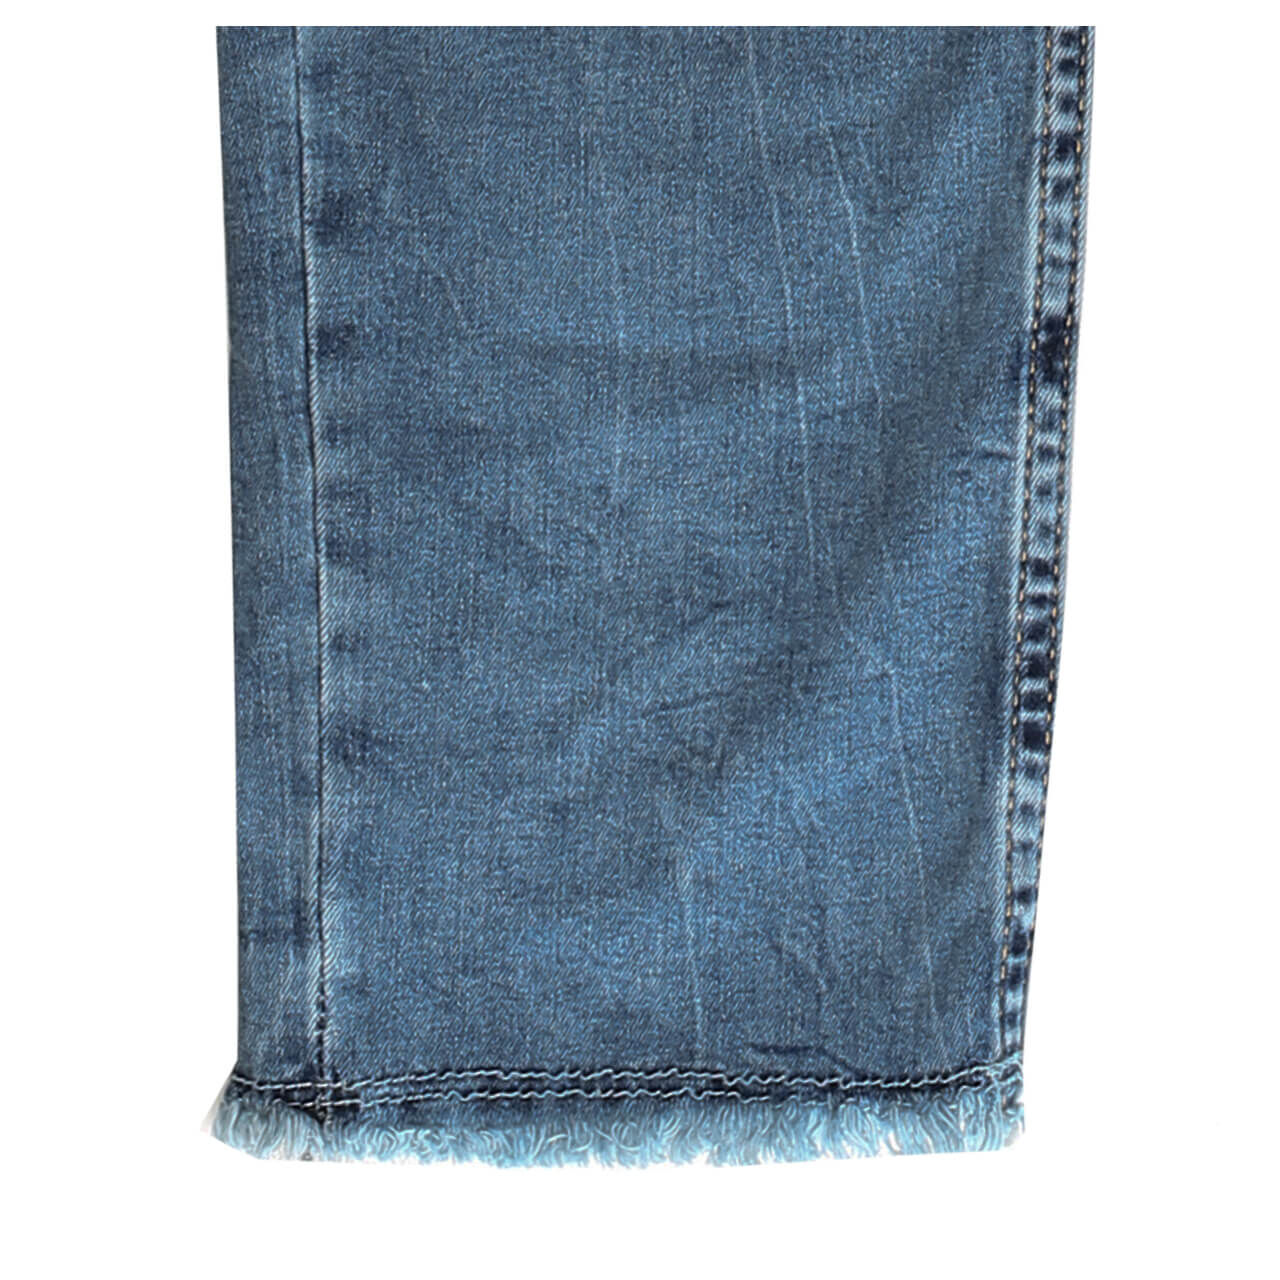 Buena Vista Jeans Tummyless 7/8 Stretch Denim holiday blue